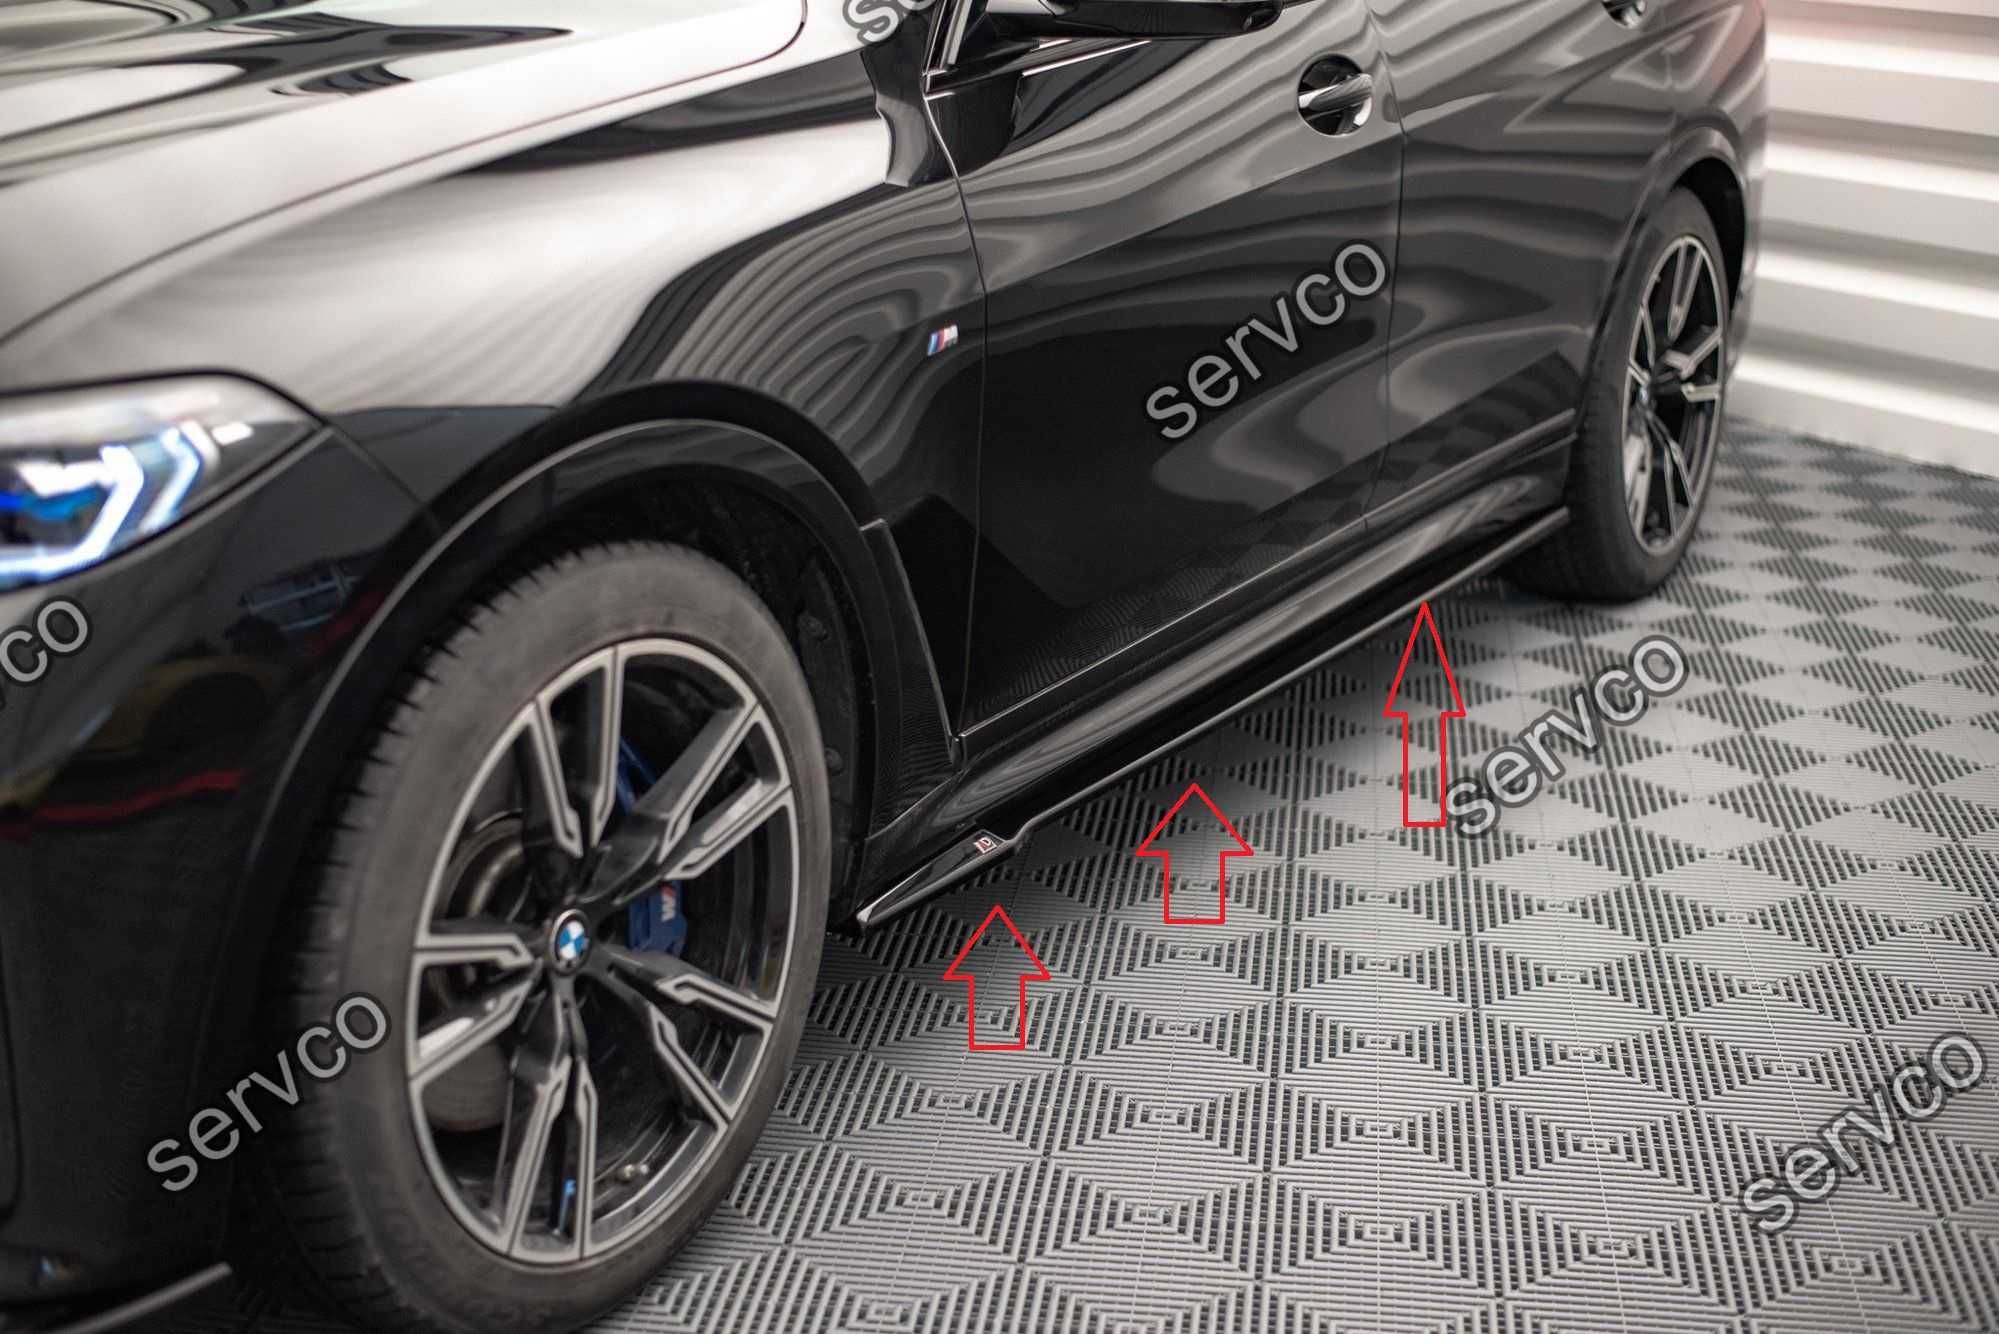 Pachet Body kit tuning BMW X7 M G07 2018- v2 - Maxton Design